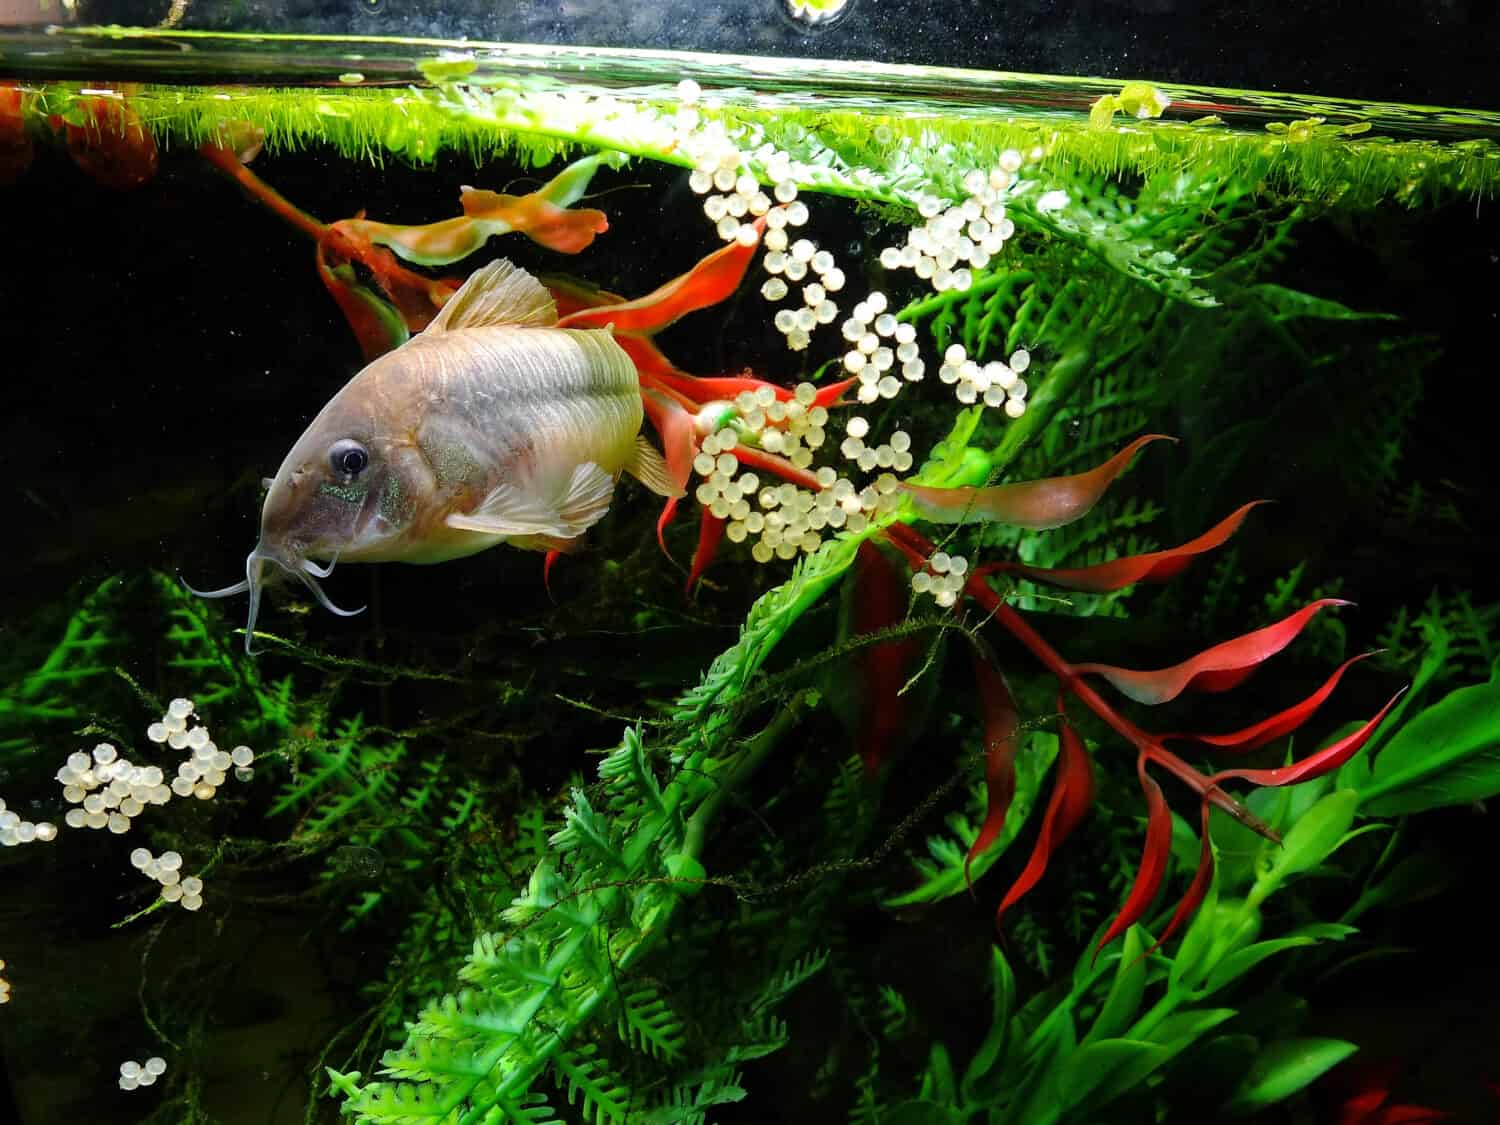 Corydora aeneus female spawning with eggs in tropical freshwater aquarium